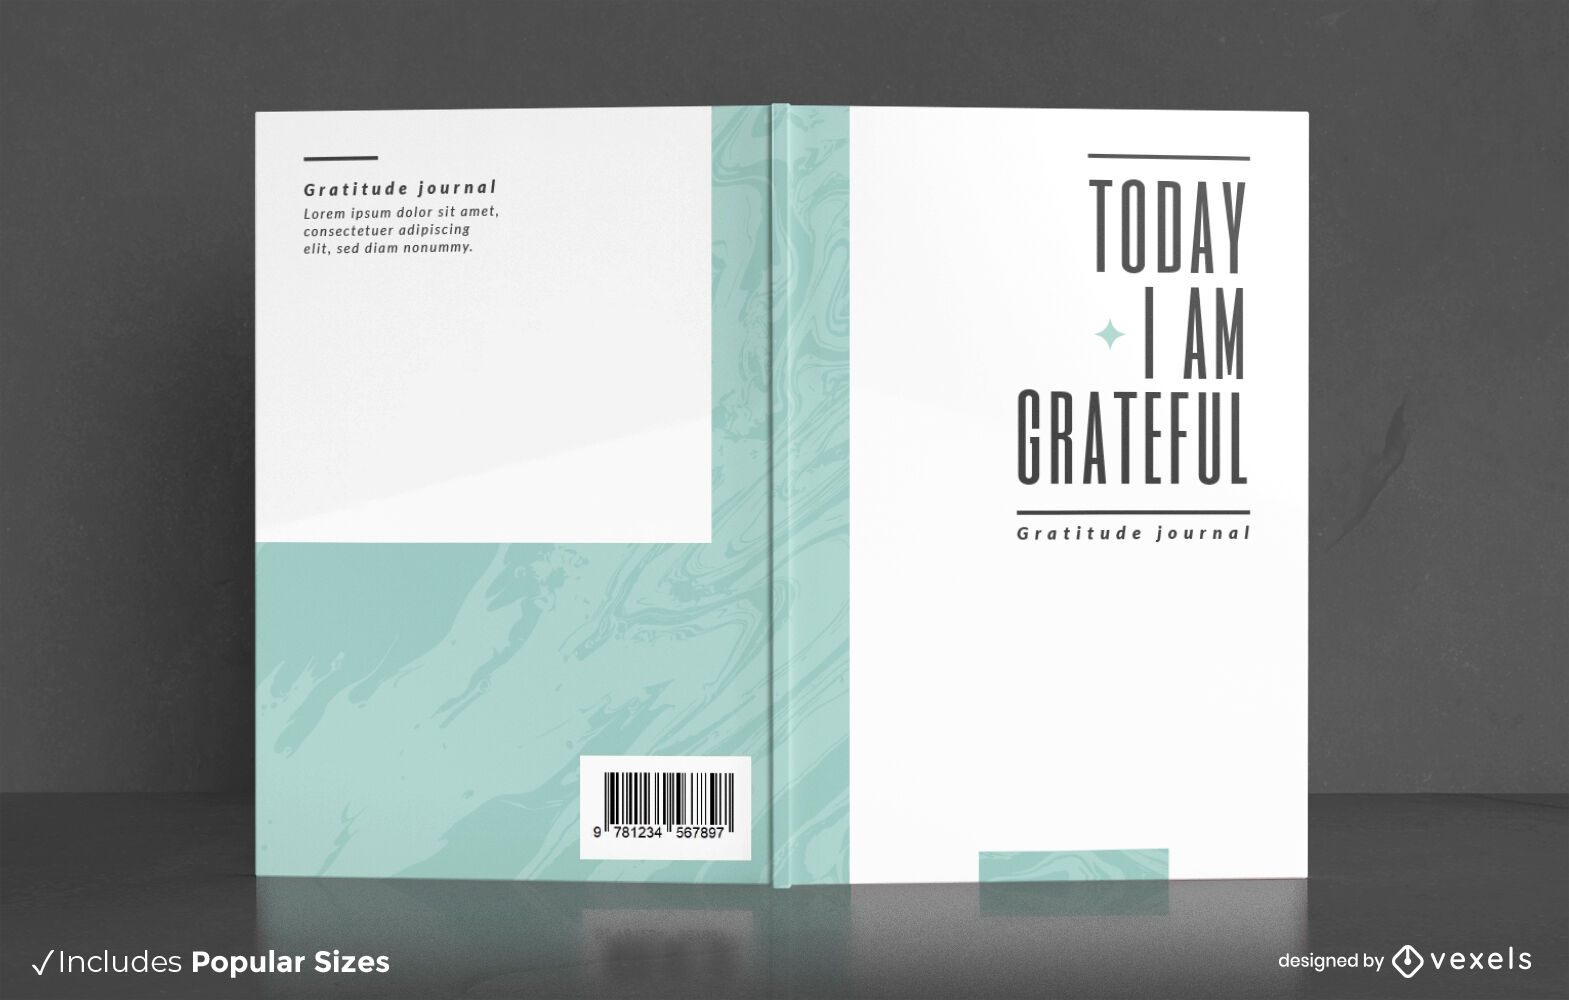 Grateful journal minimalist book cover design